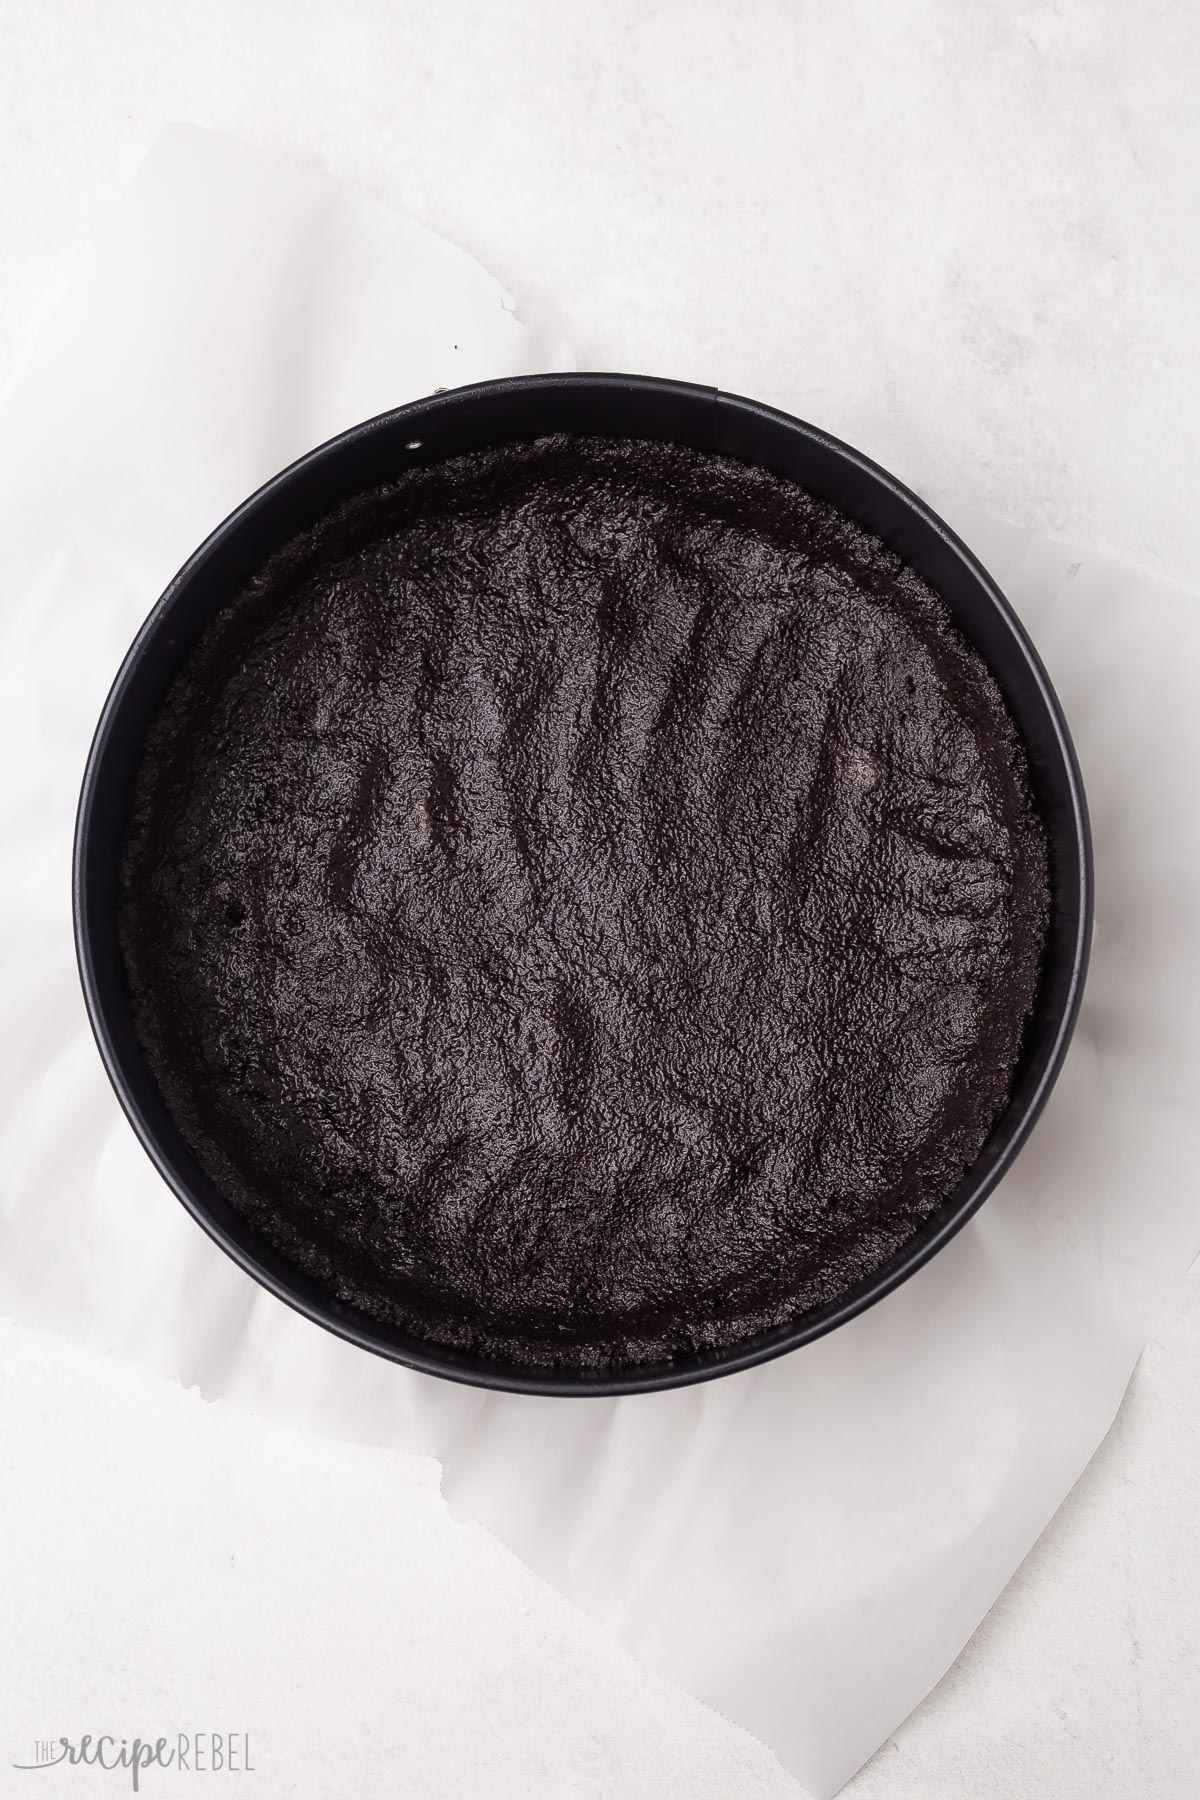 oreo crust in black springform pan.